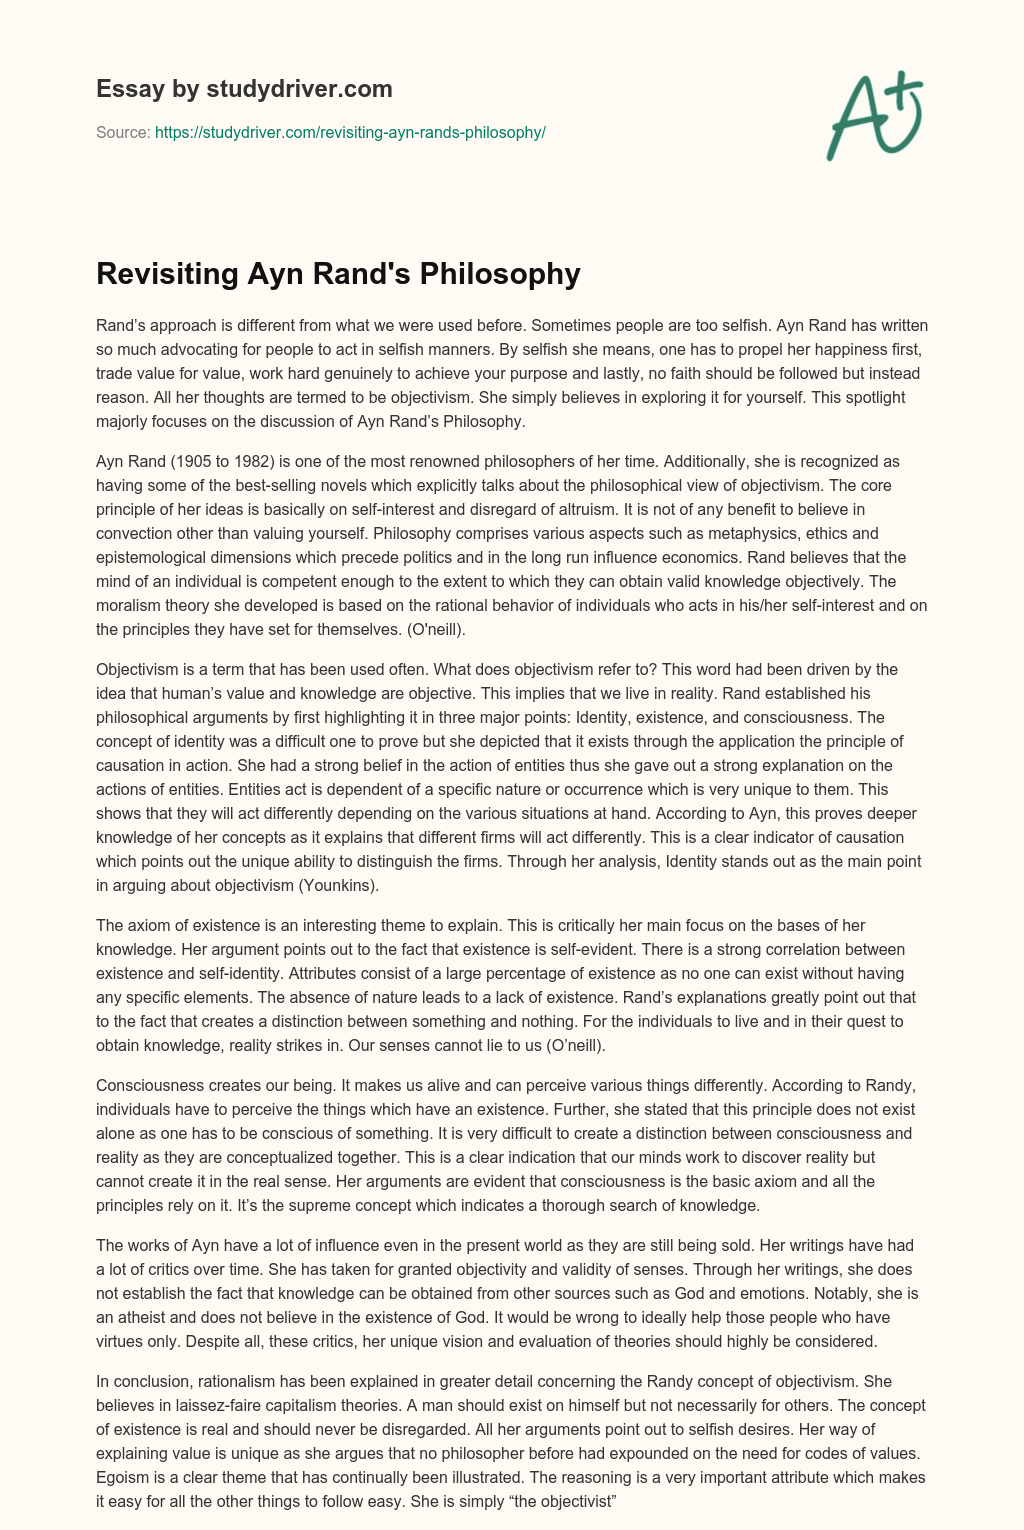 Revisiting Ayn Rand’s Philosophy essay